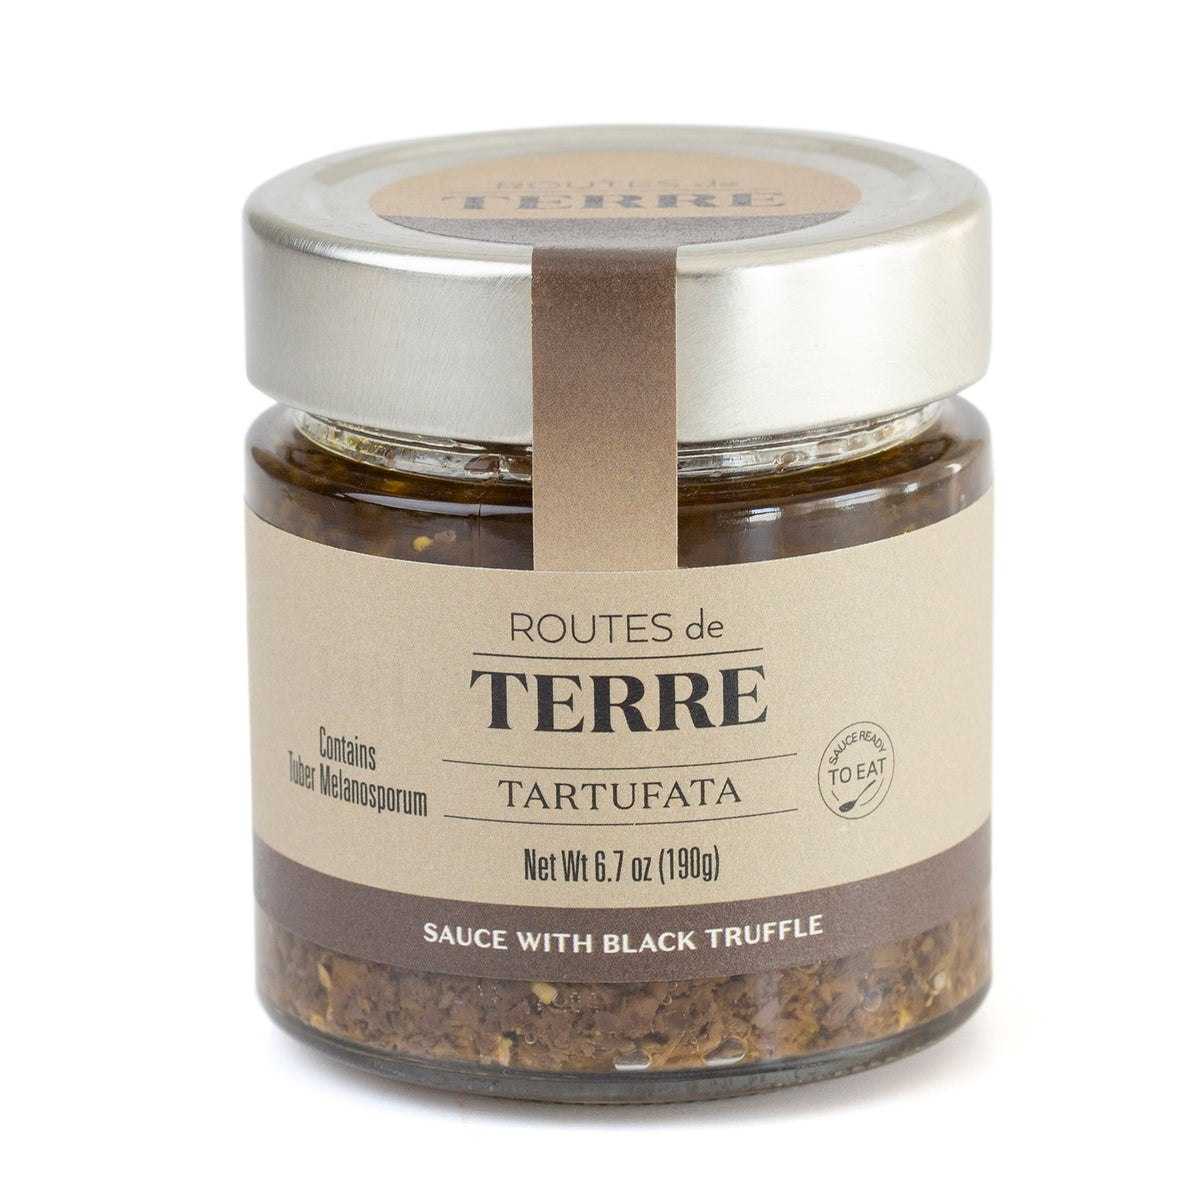 Tartufata - perfect for aromatic truffle sauces